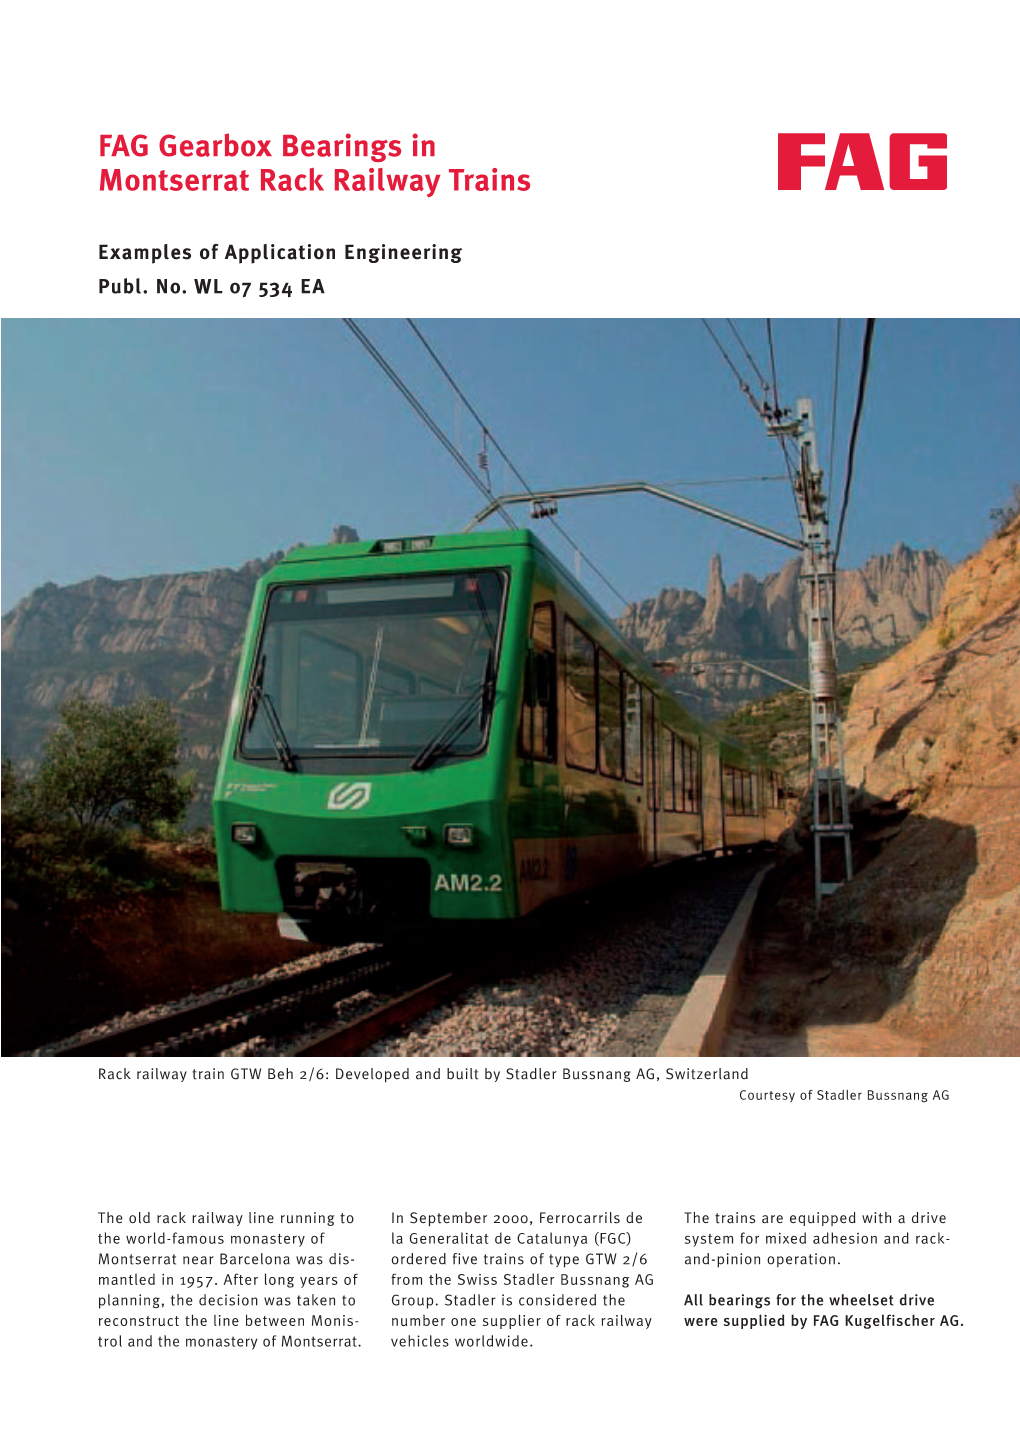 FAG Gearbox Bearings in Montserrat Rack Railway Trains: Publication